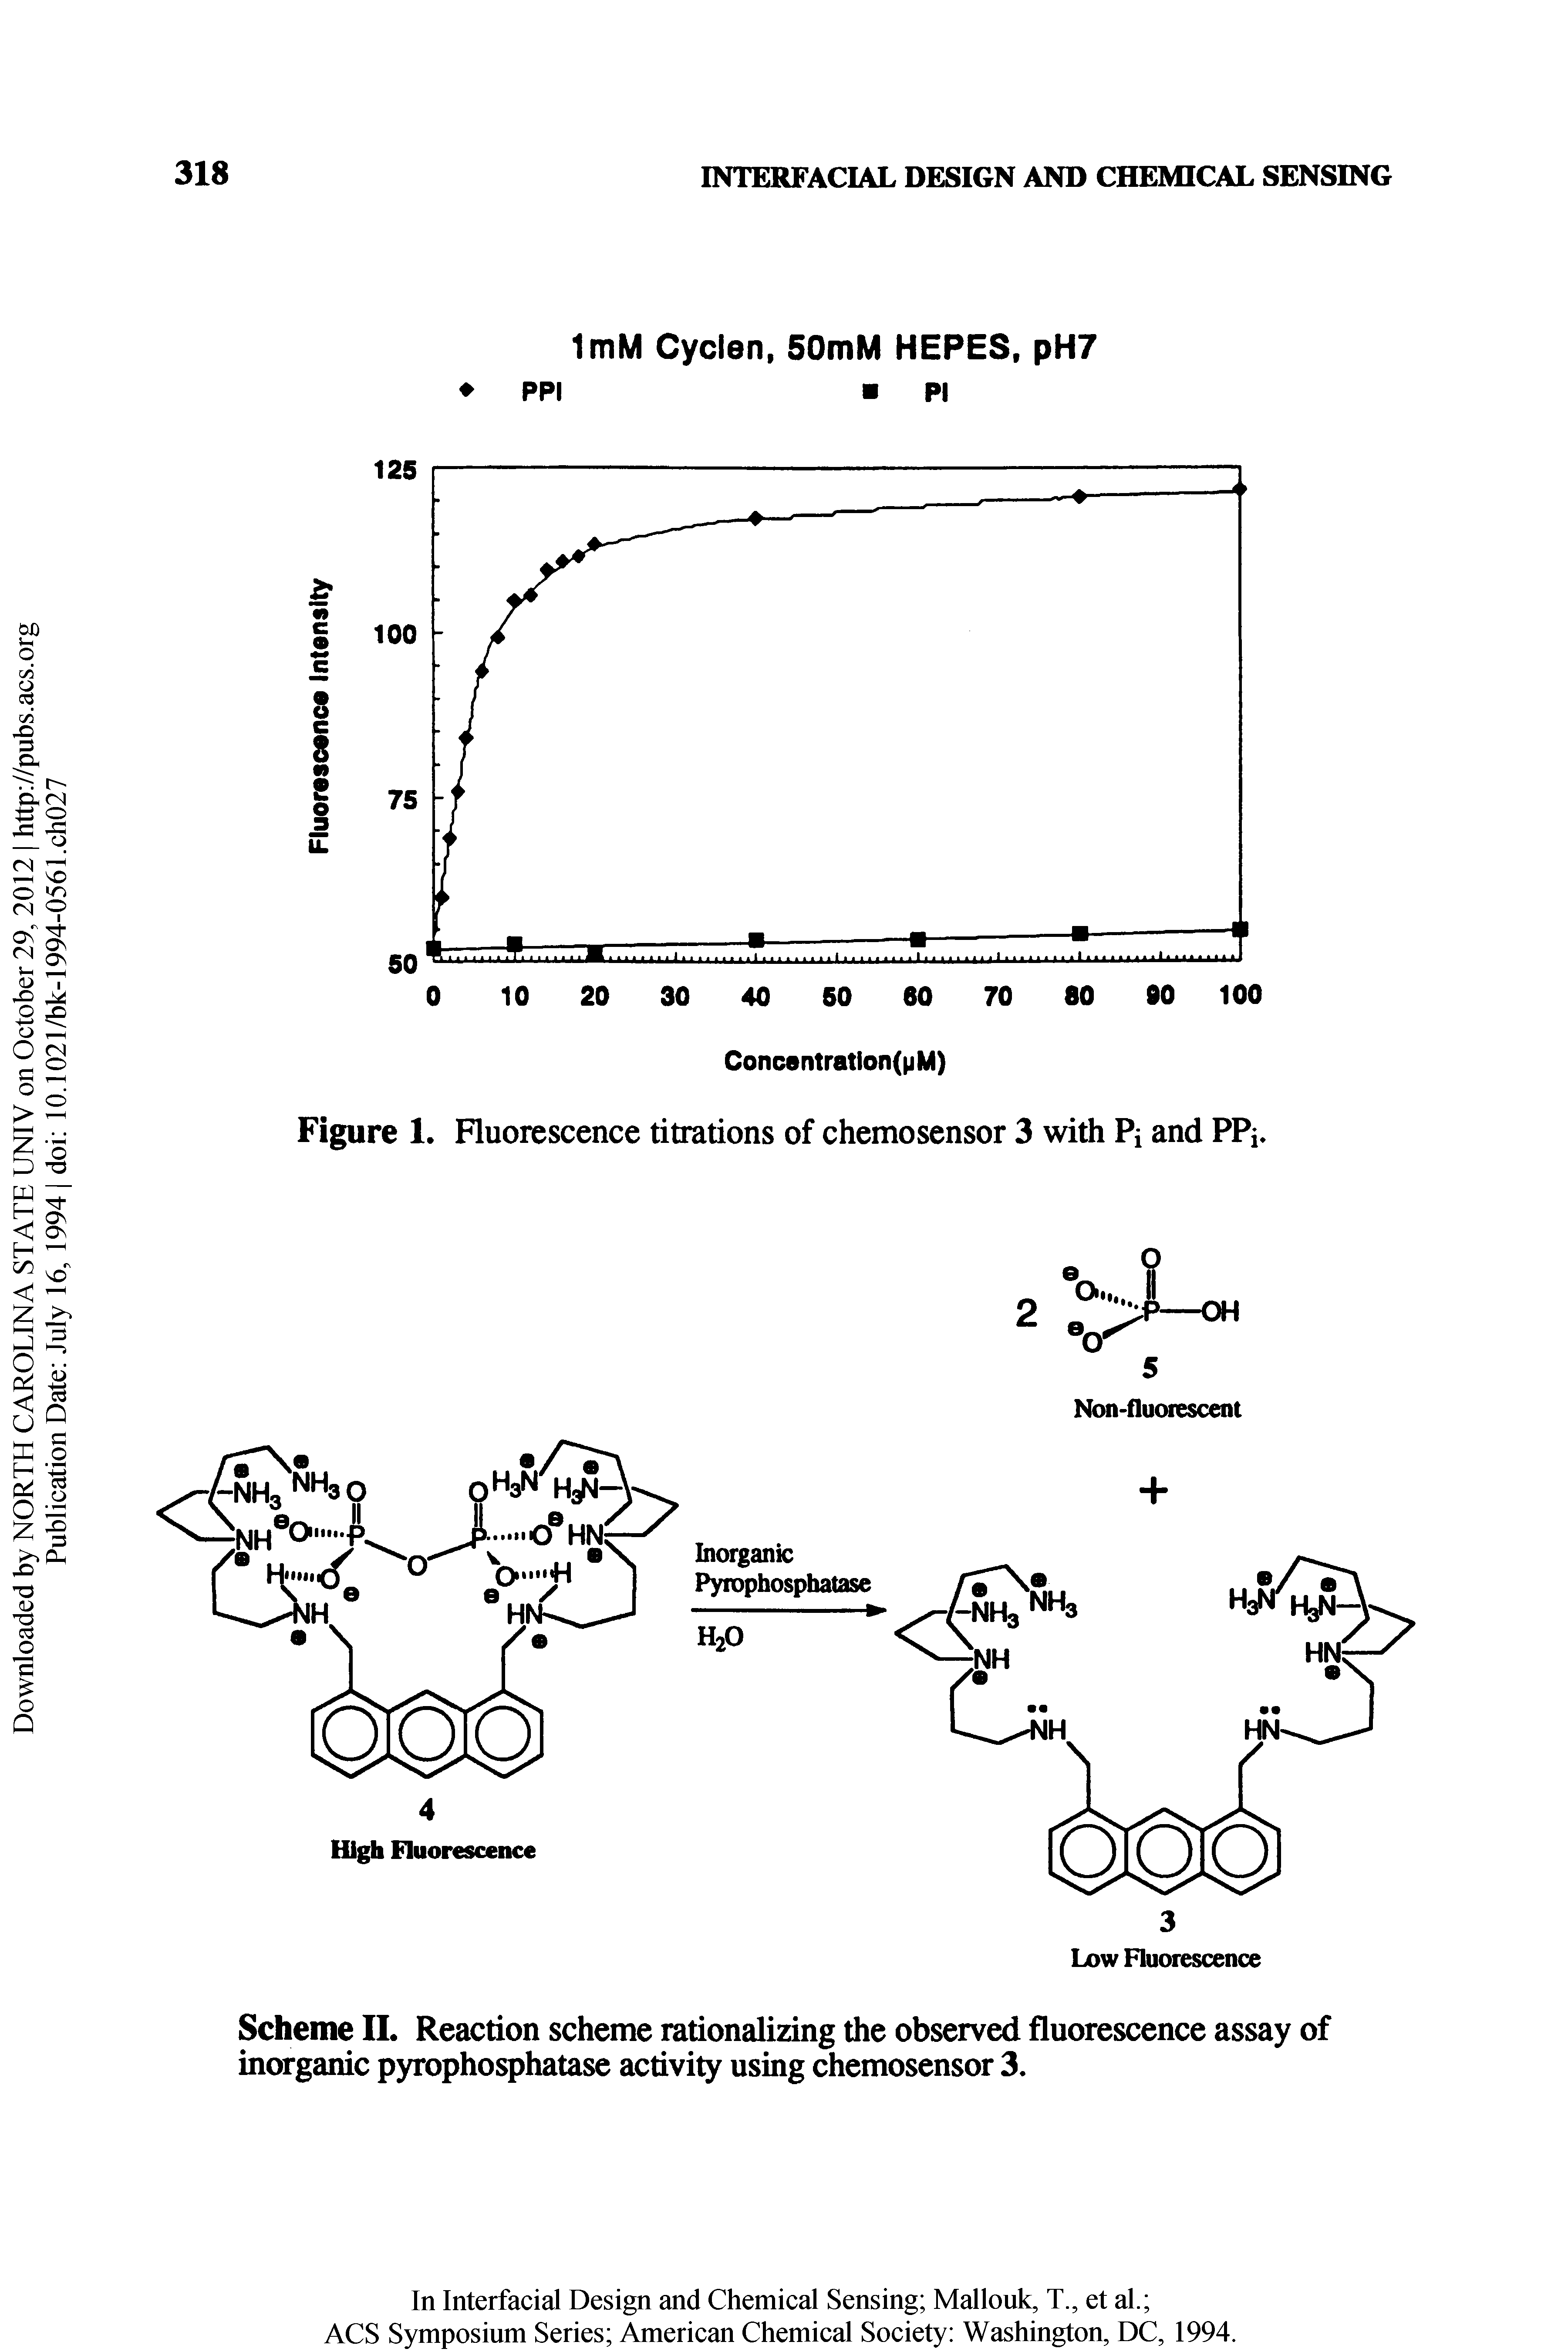 Scheme II. Reaction scheme rationalizing the observed fluorescence assay of inorganic pyrophosphatase activity using chemosensor 3.